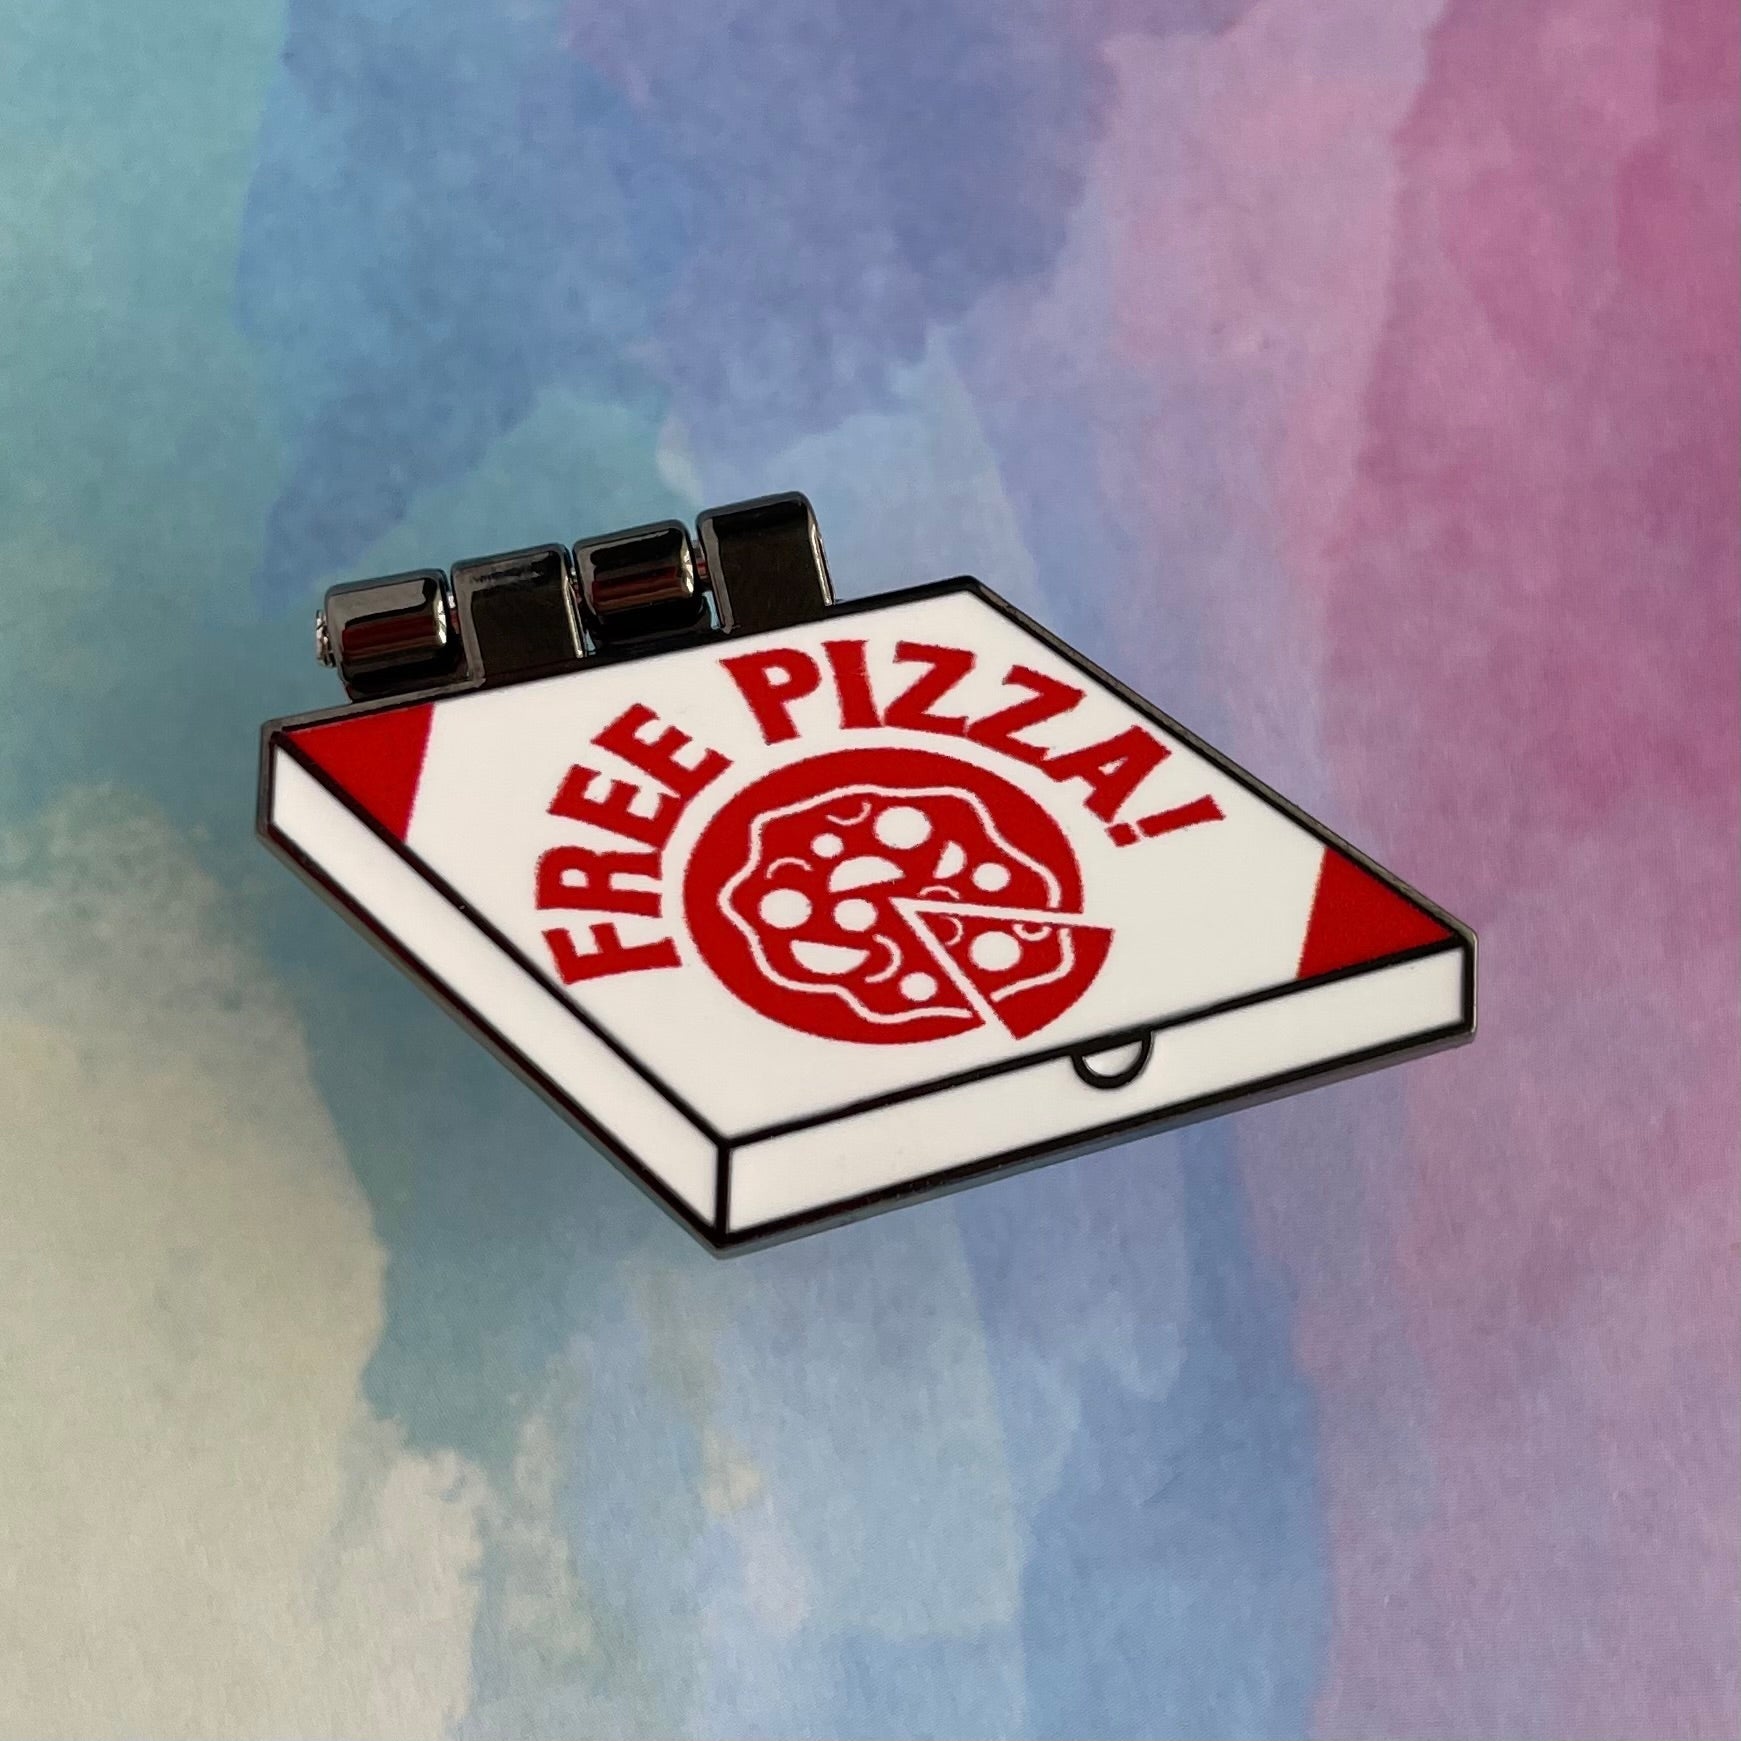 Free Pizza Pin - Rad Girl Creations